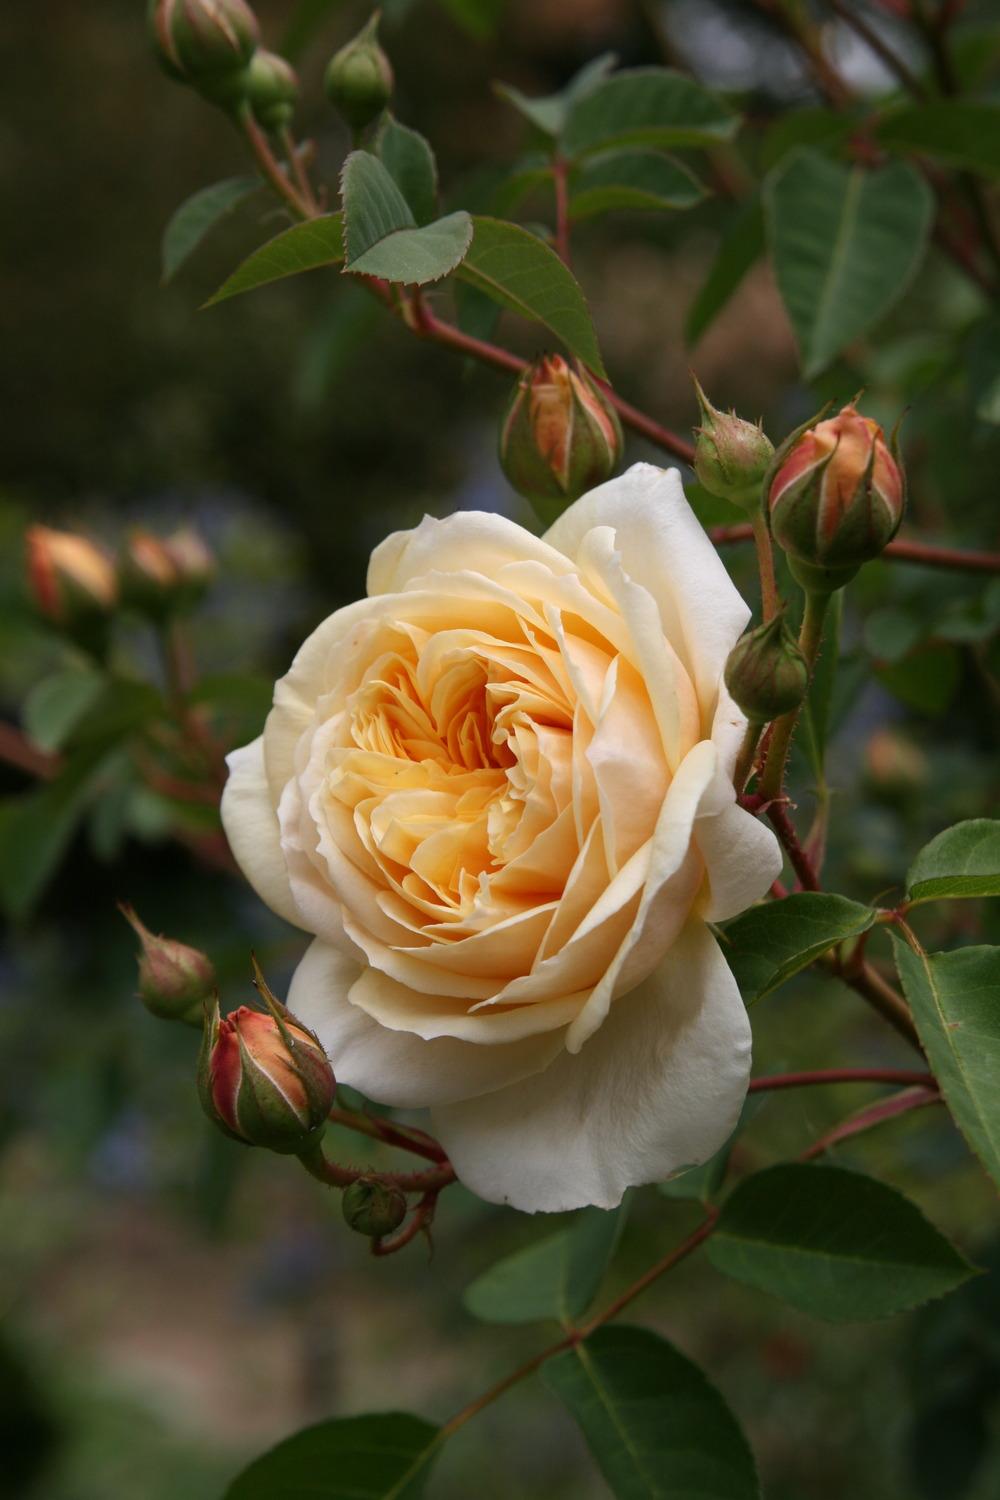 Photo of Rose (Rosa 'Teasing Georgia') uploaded by Calif_Sue